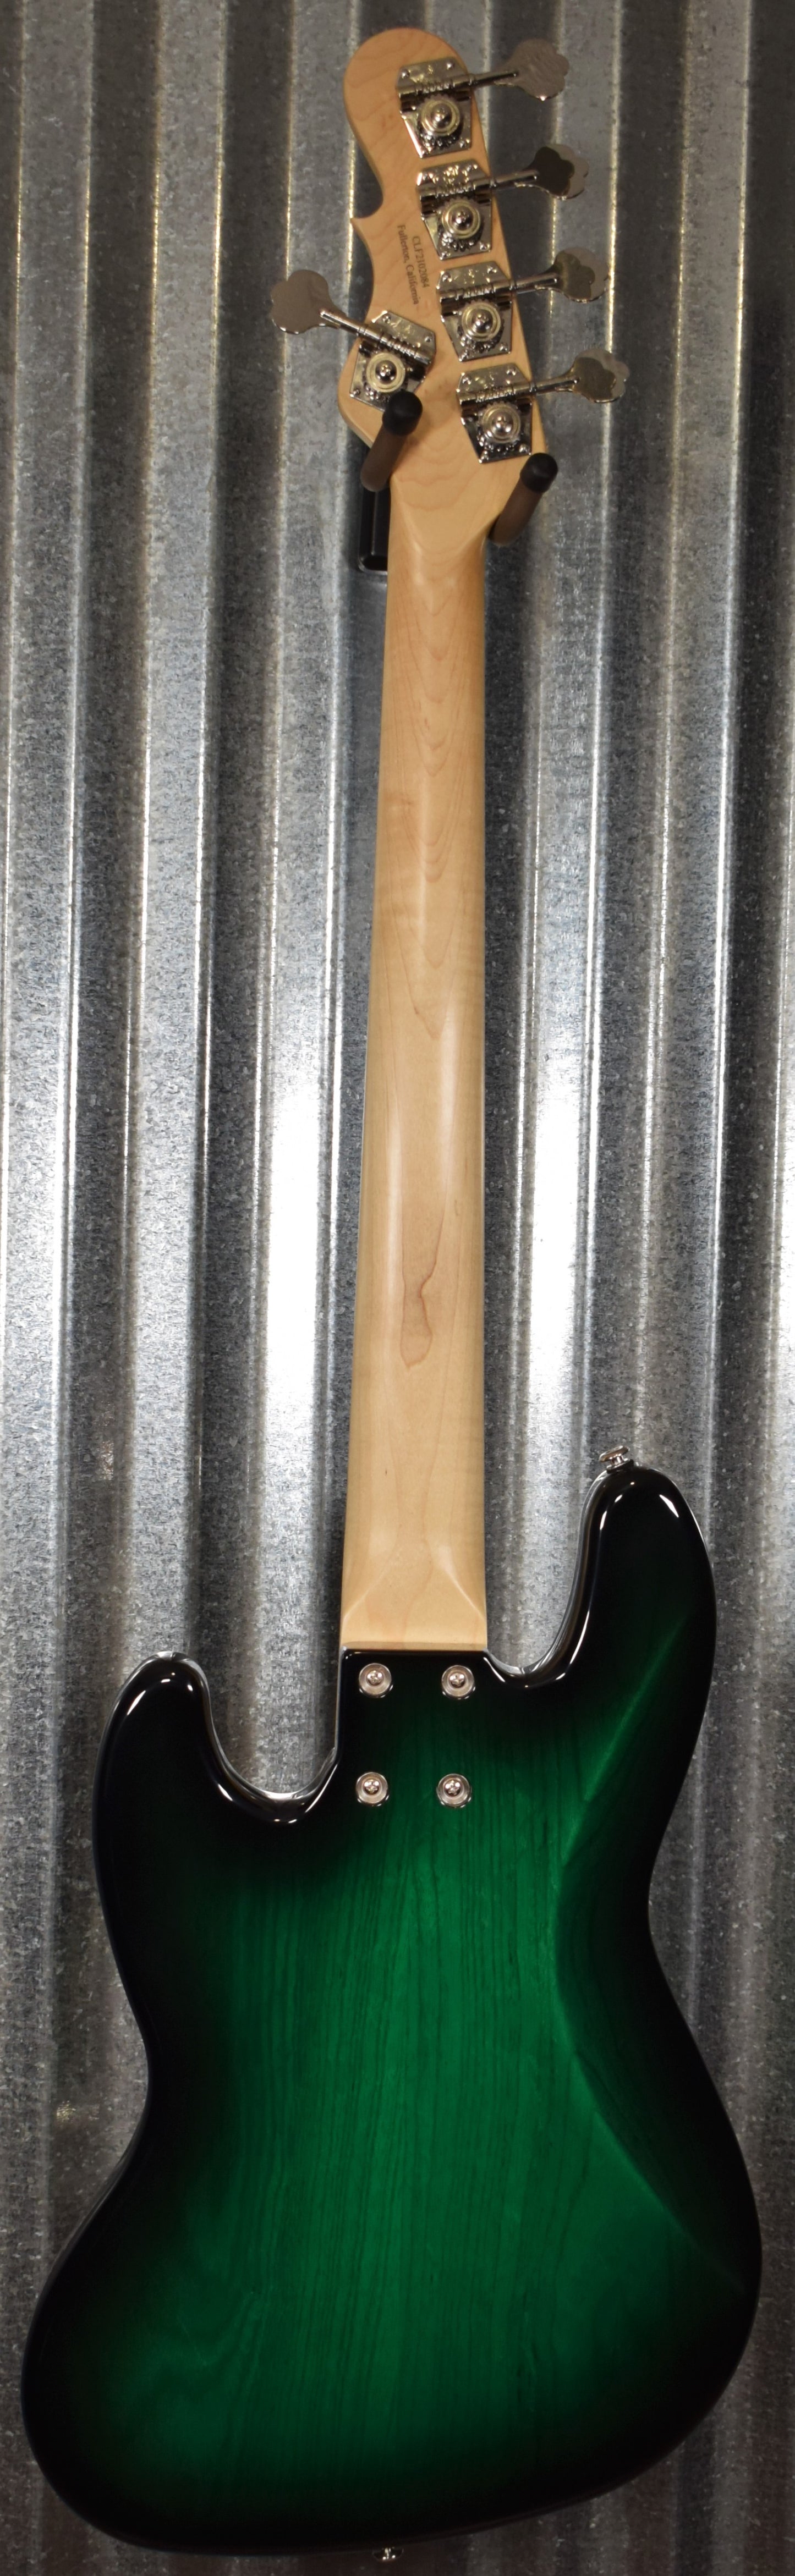 G&L USA JB-5 5 String Jazz Bass Greenburst & Case JB5 #2084